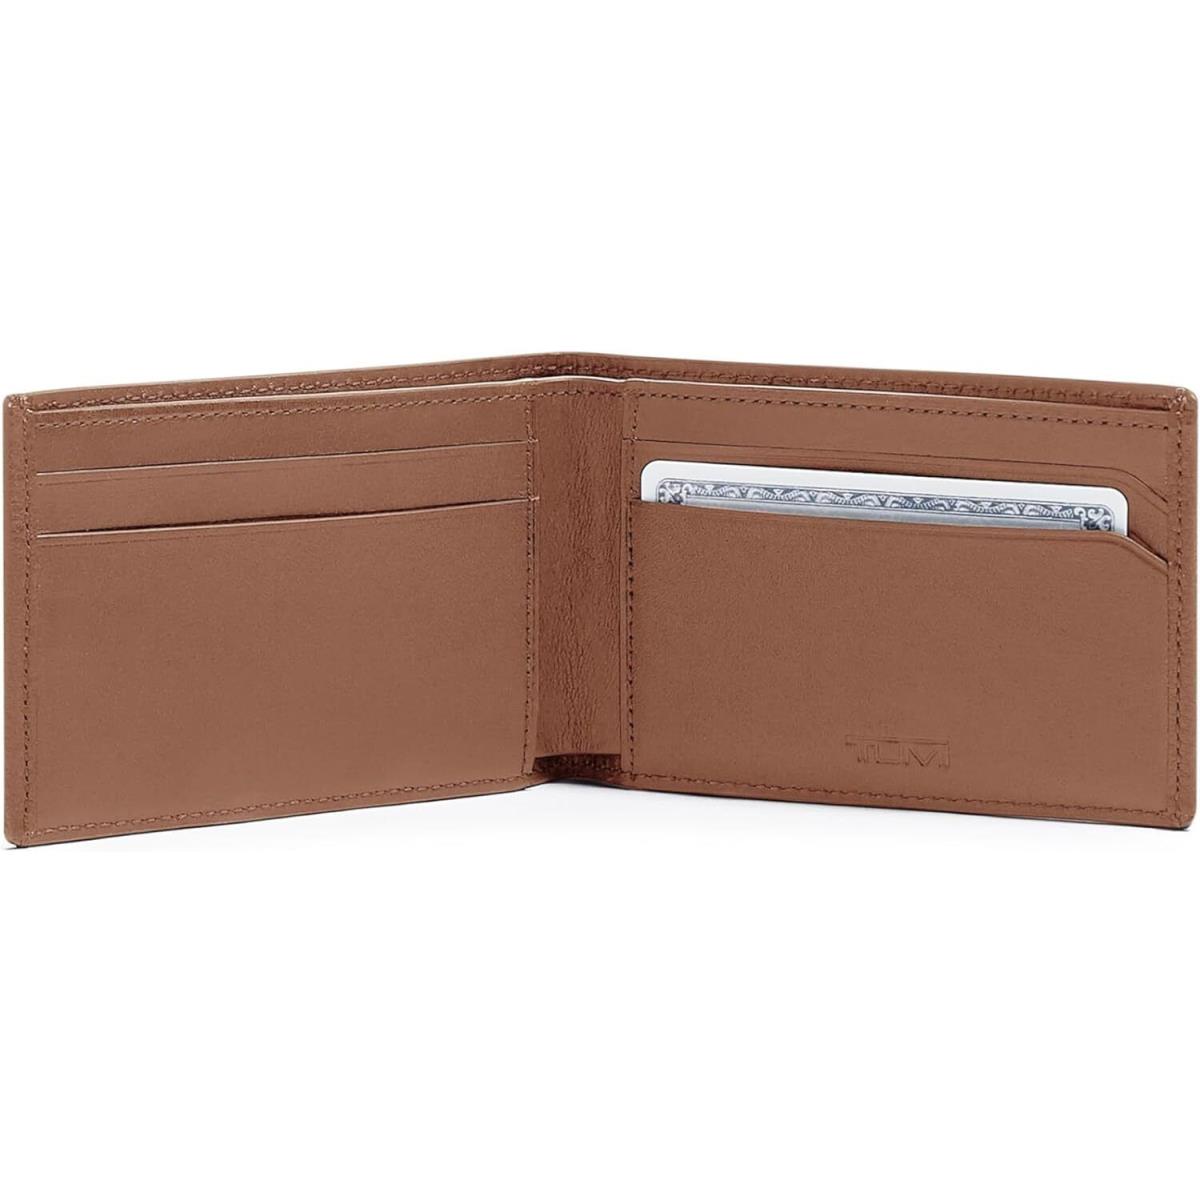 Tumi - Nassau Slim Single Billfold Leather Wallet For Men - Cognac